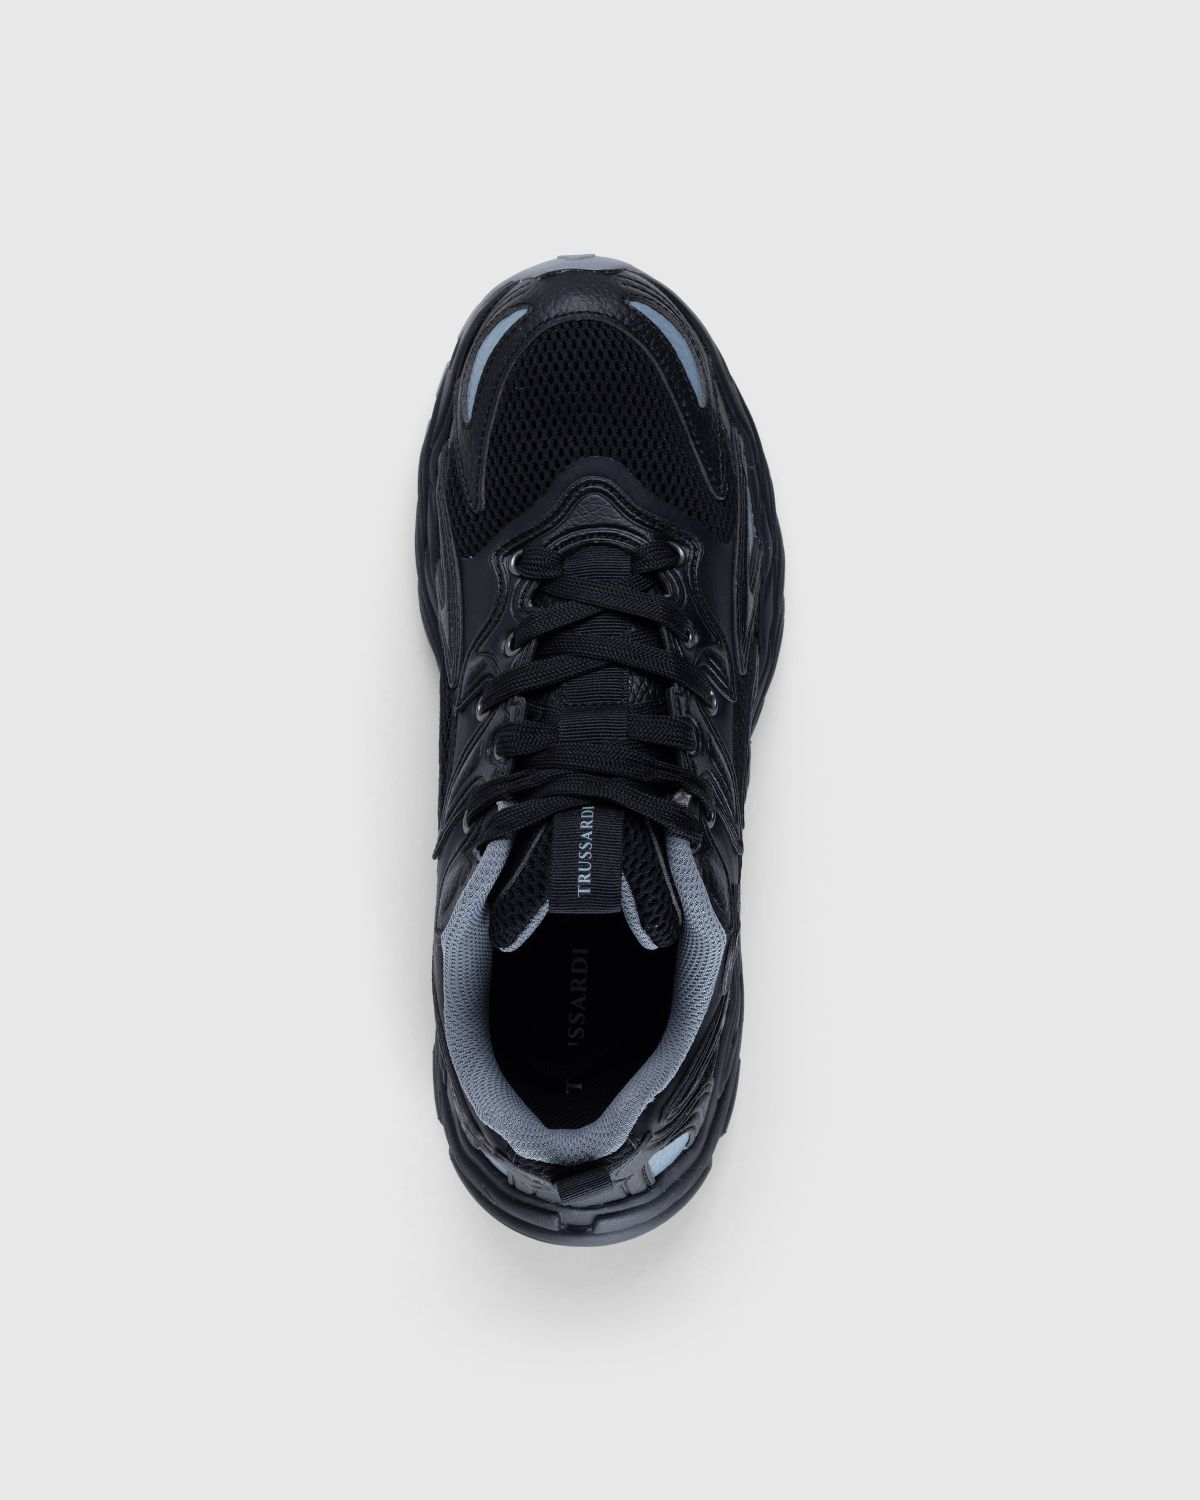 Trussardi – Retro Runner Sneaker - Sneakers - Black - Image 5